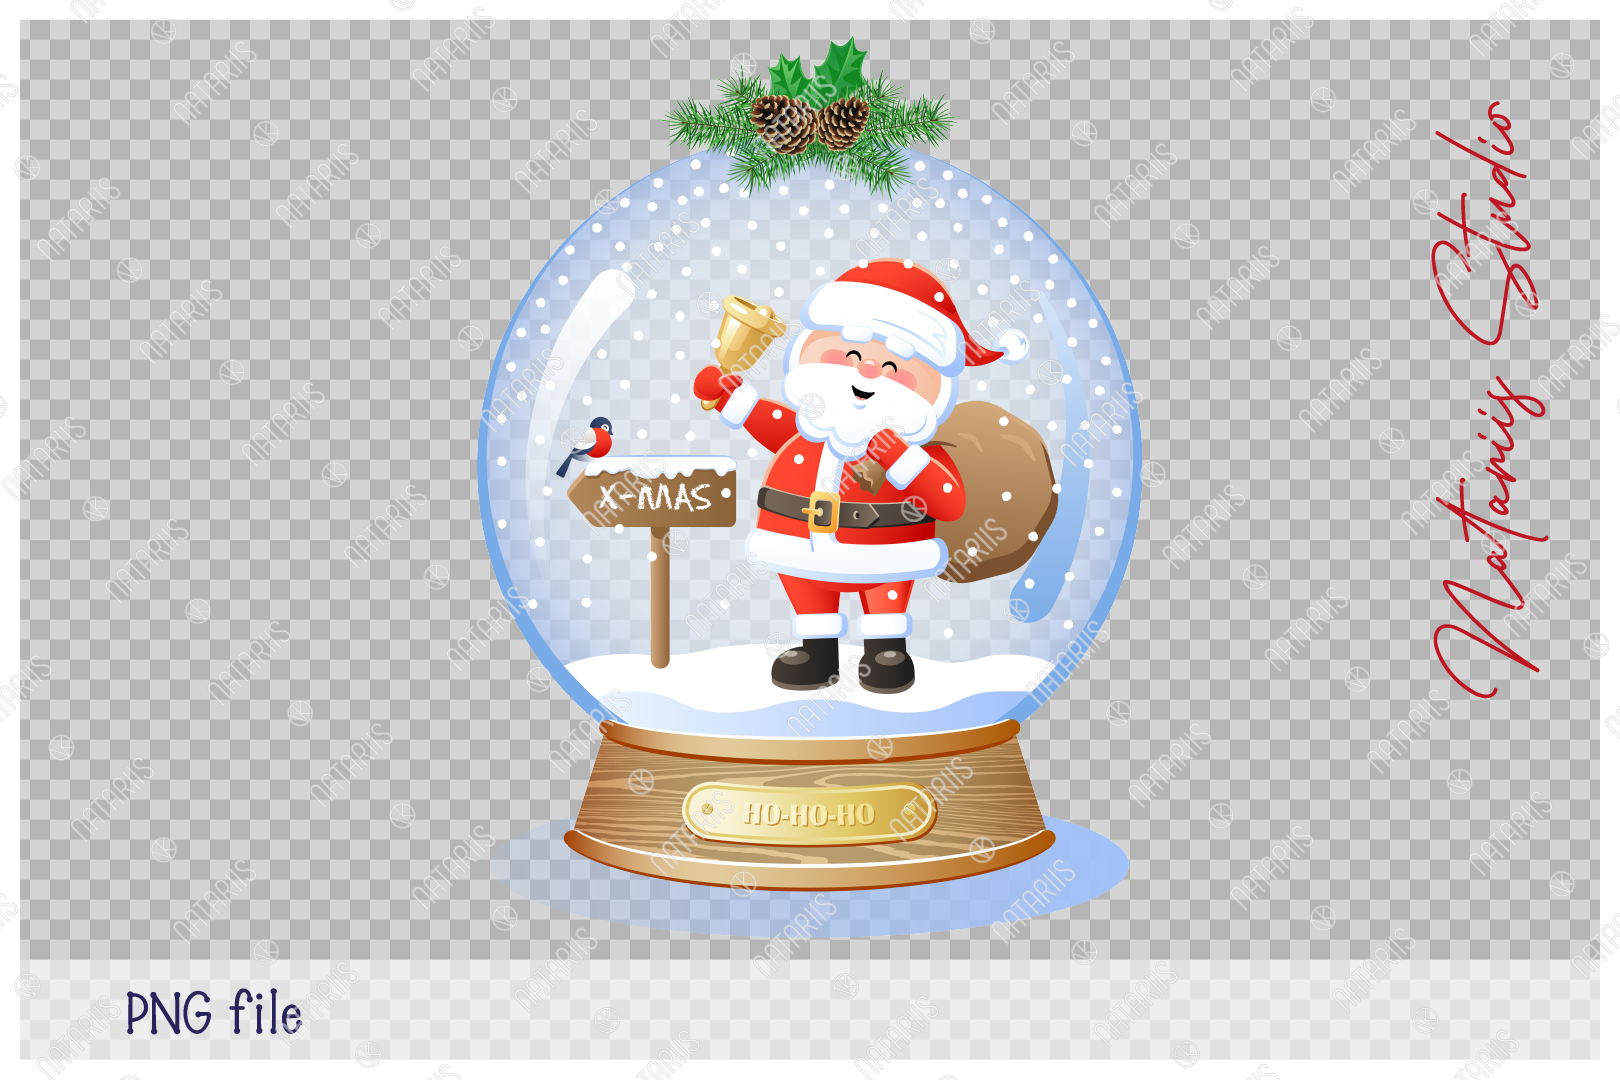 Christmas Snow Globe With Funny Santa Claus By Natariis Studio Thehungryjpeg Com